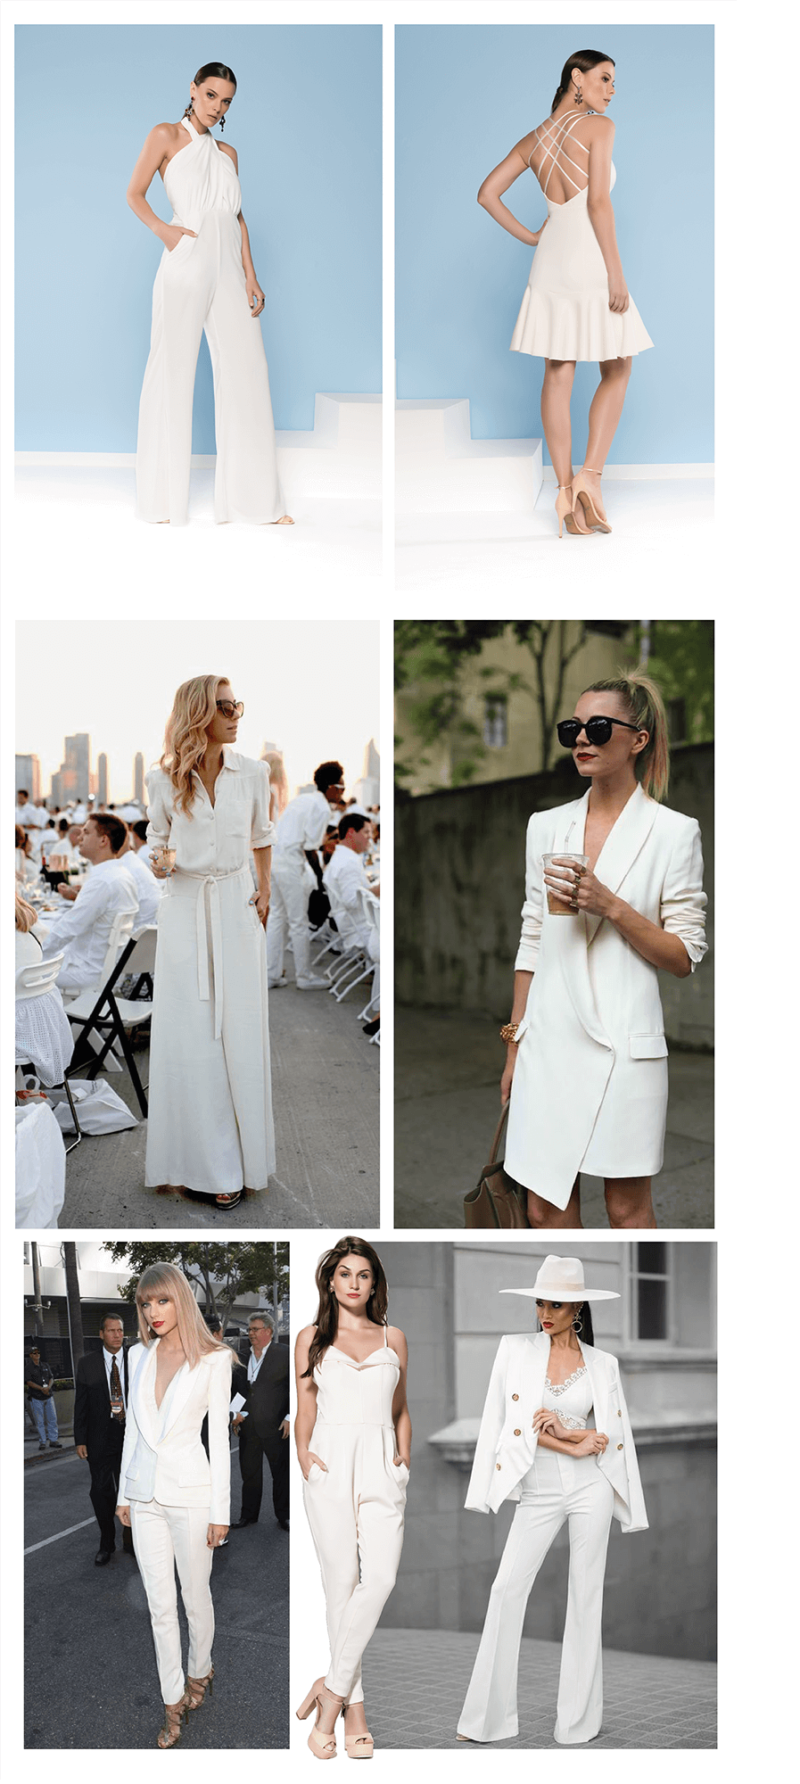 Branco nos trend topics - Moda total white #AmeyOficial